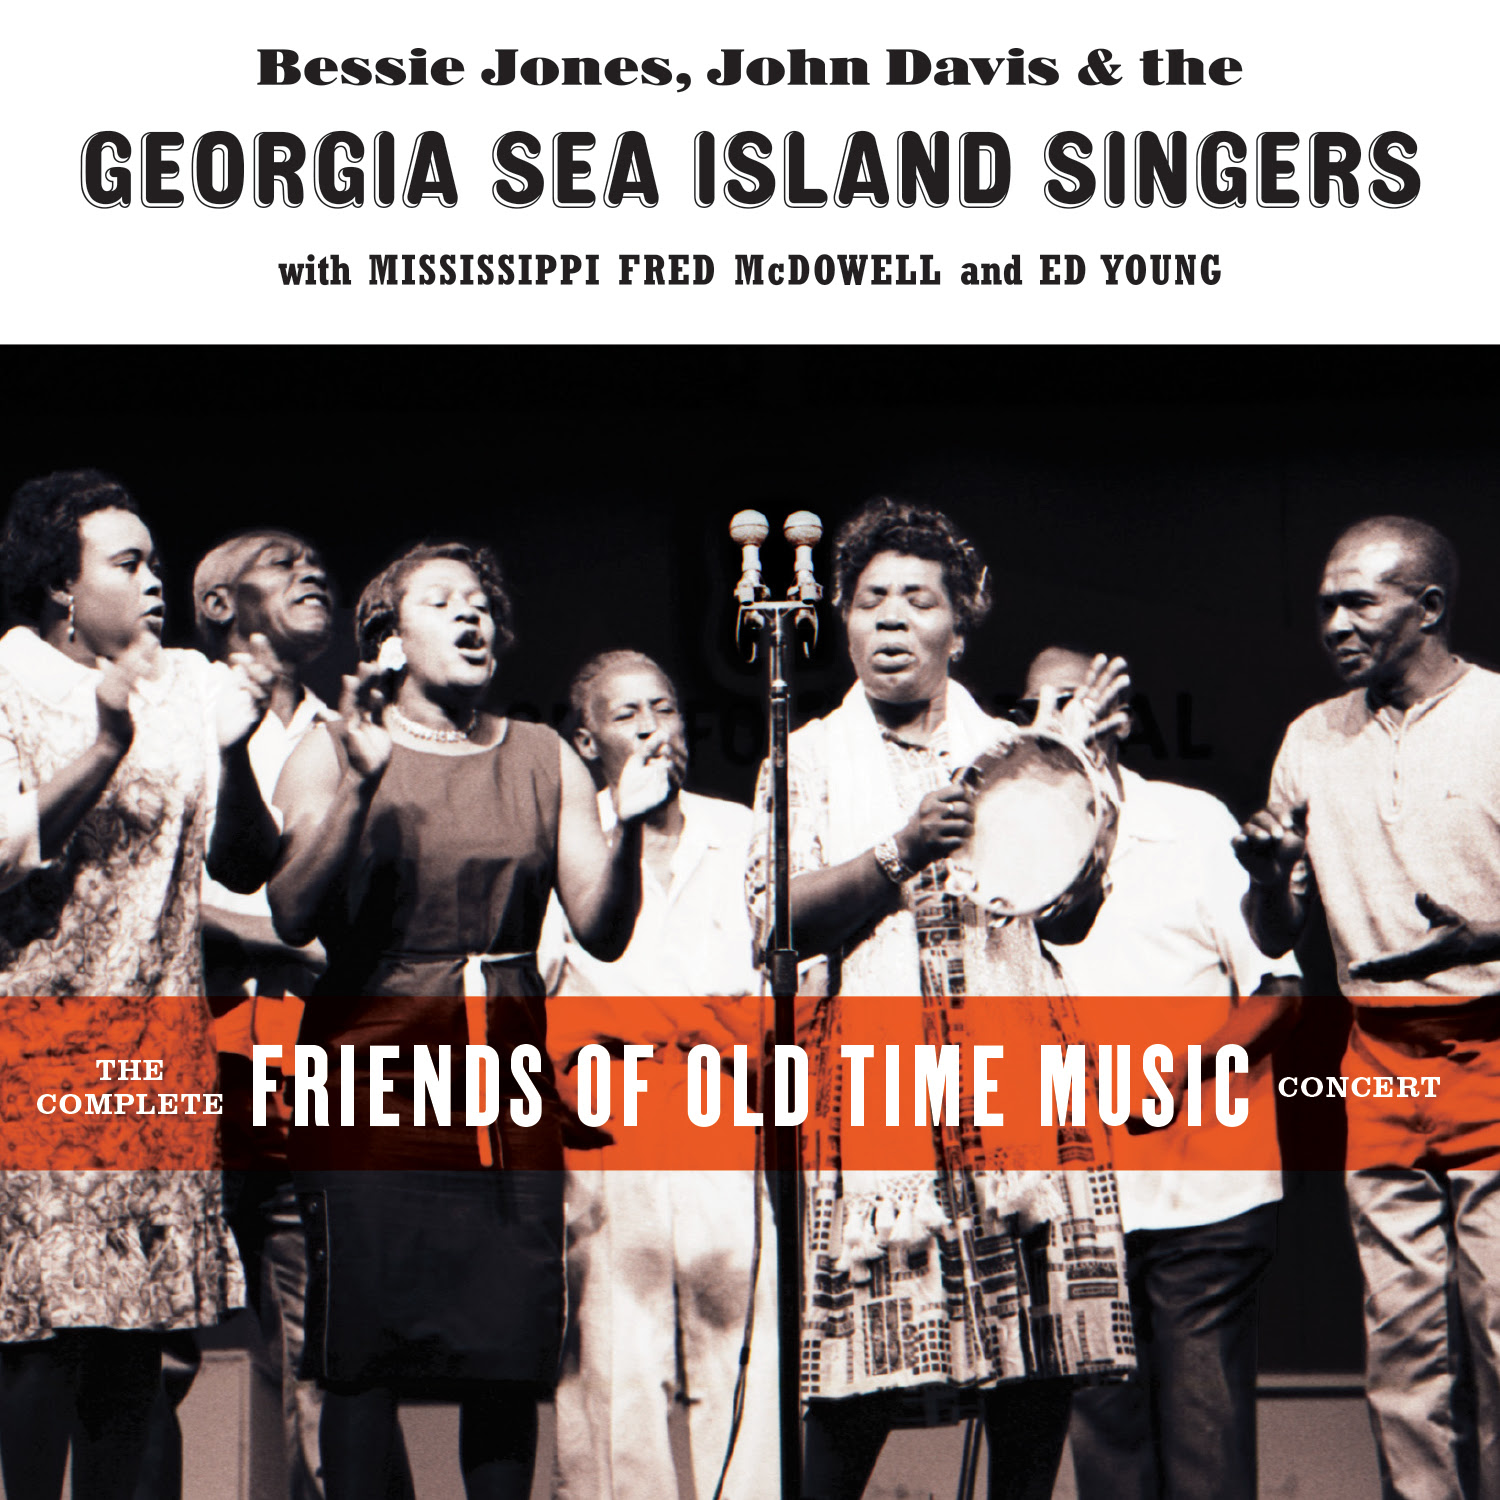 Smithsonian Folkways Releases Sampler of Georgia Sea Island Singers + Mississippi Fred McDowell Album Coming June